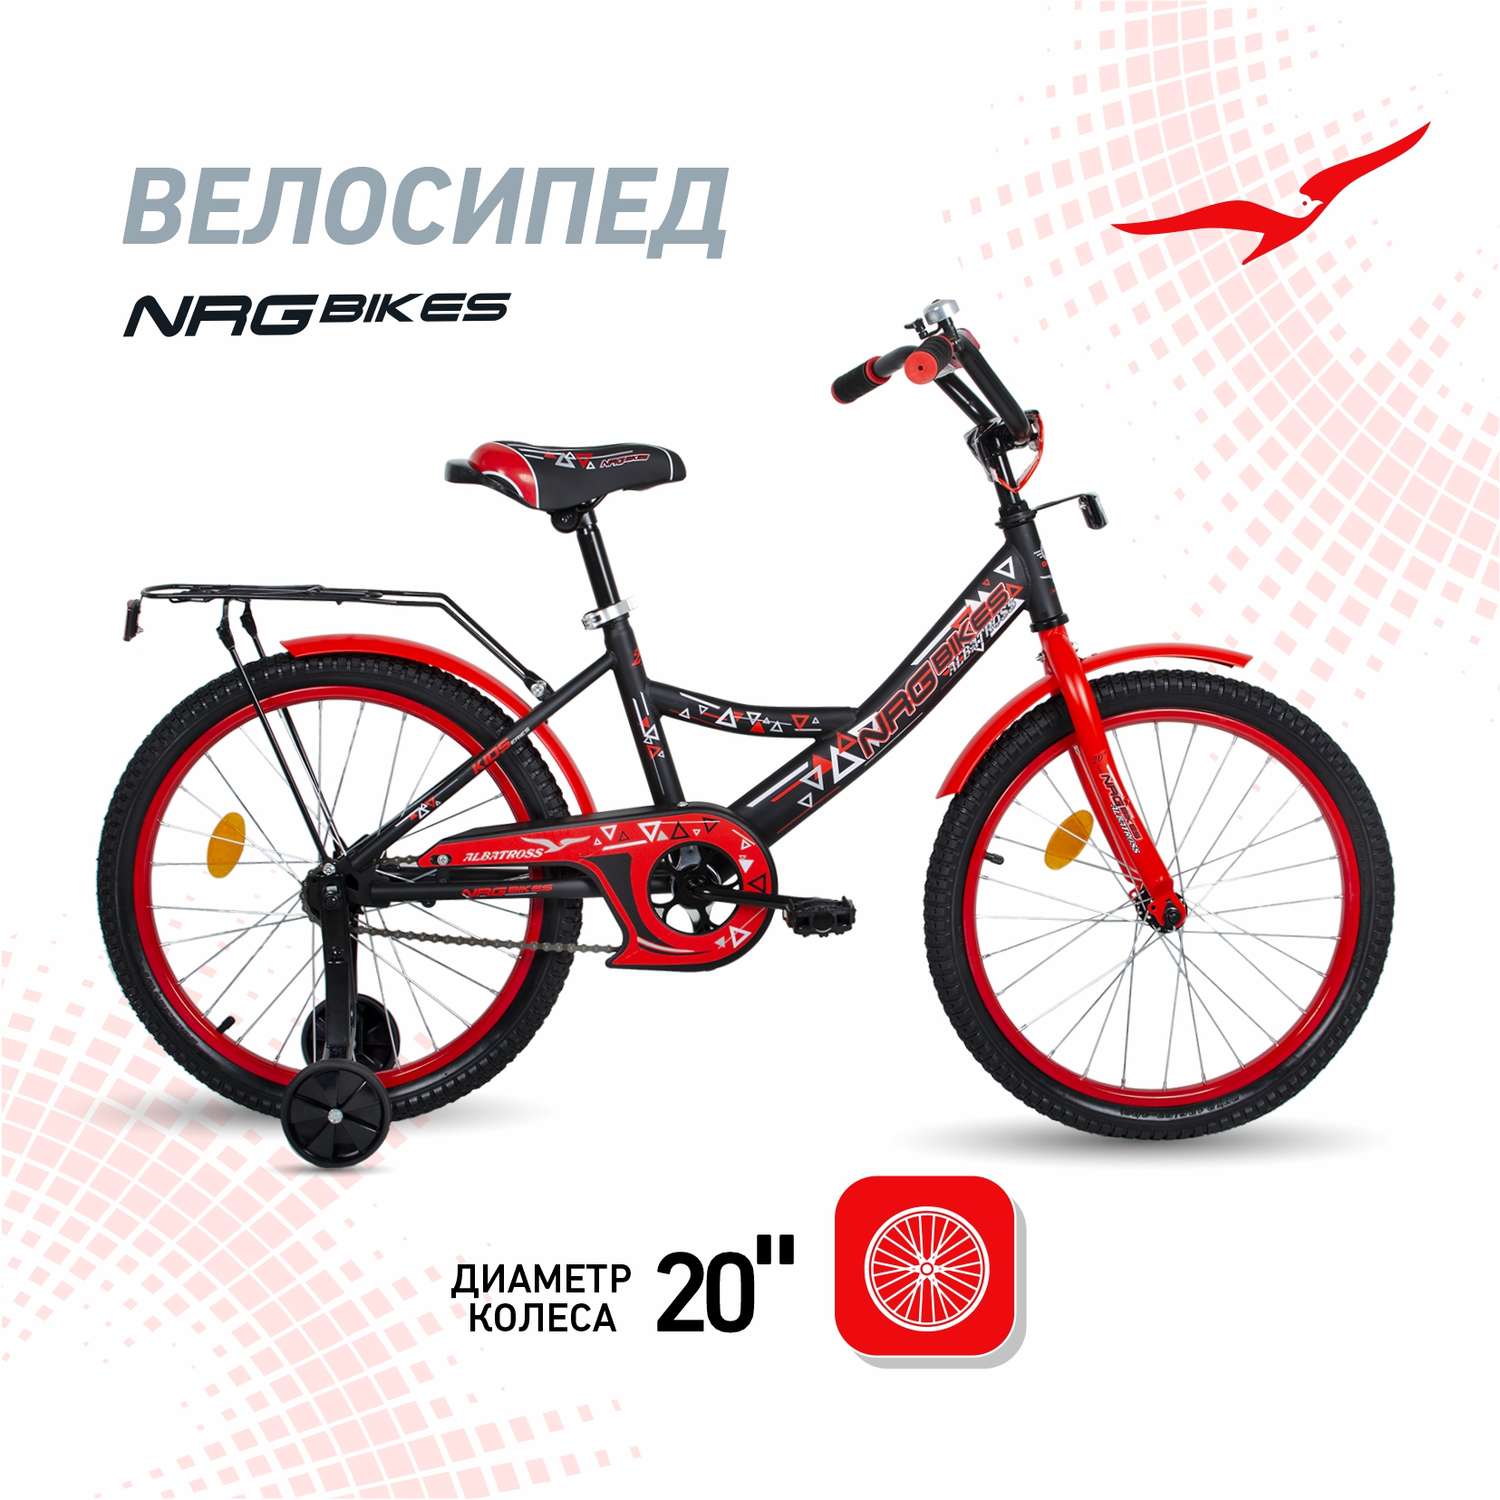 Велосипед NRG BIKES ALBATROSS 20 black-red - фото 1